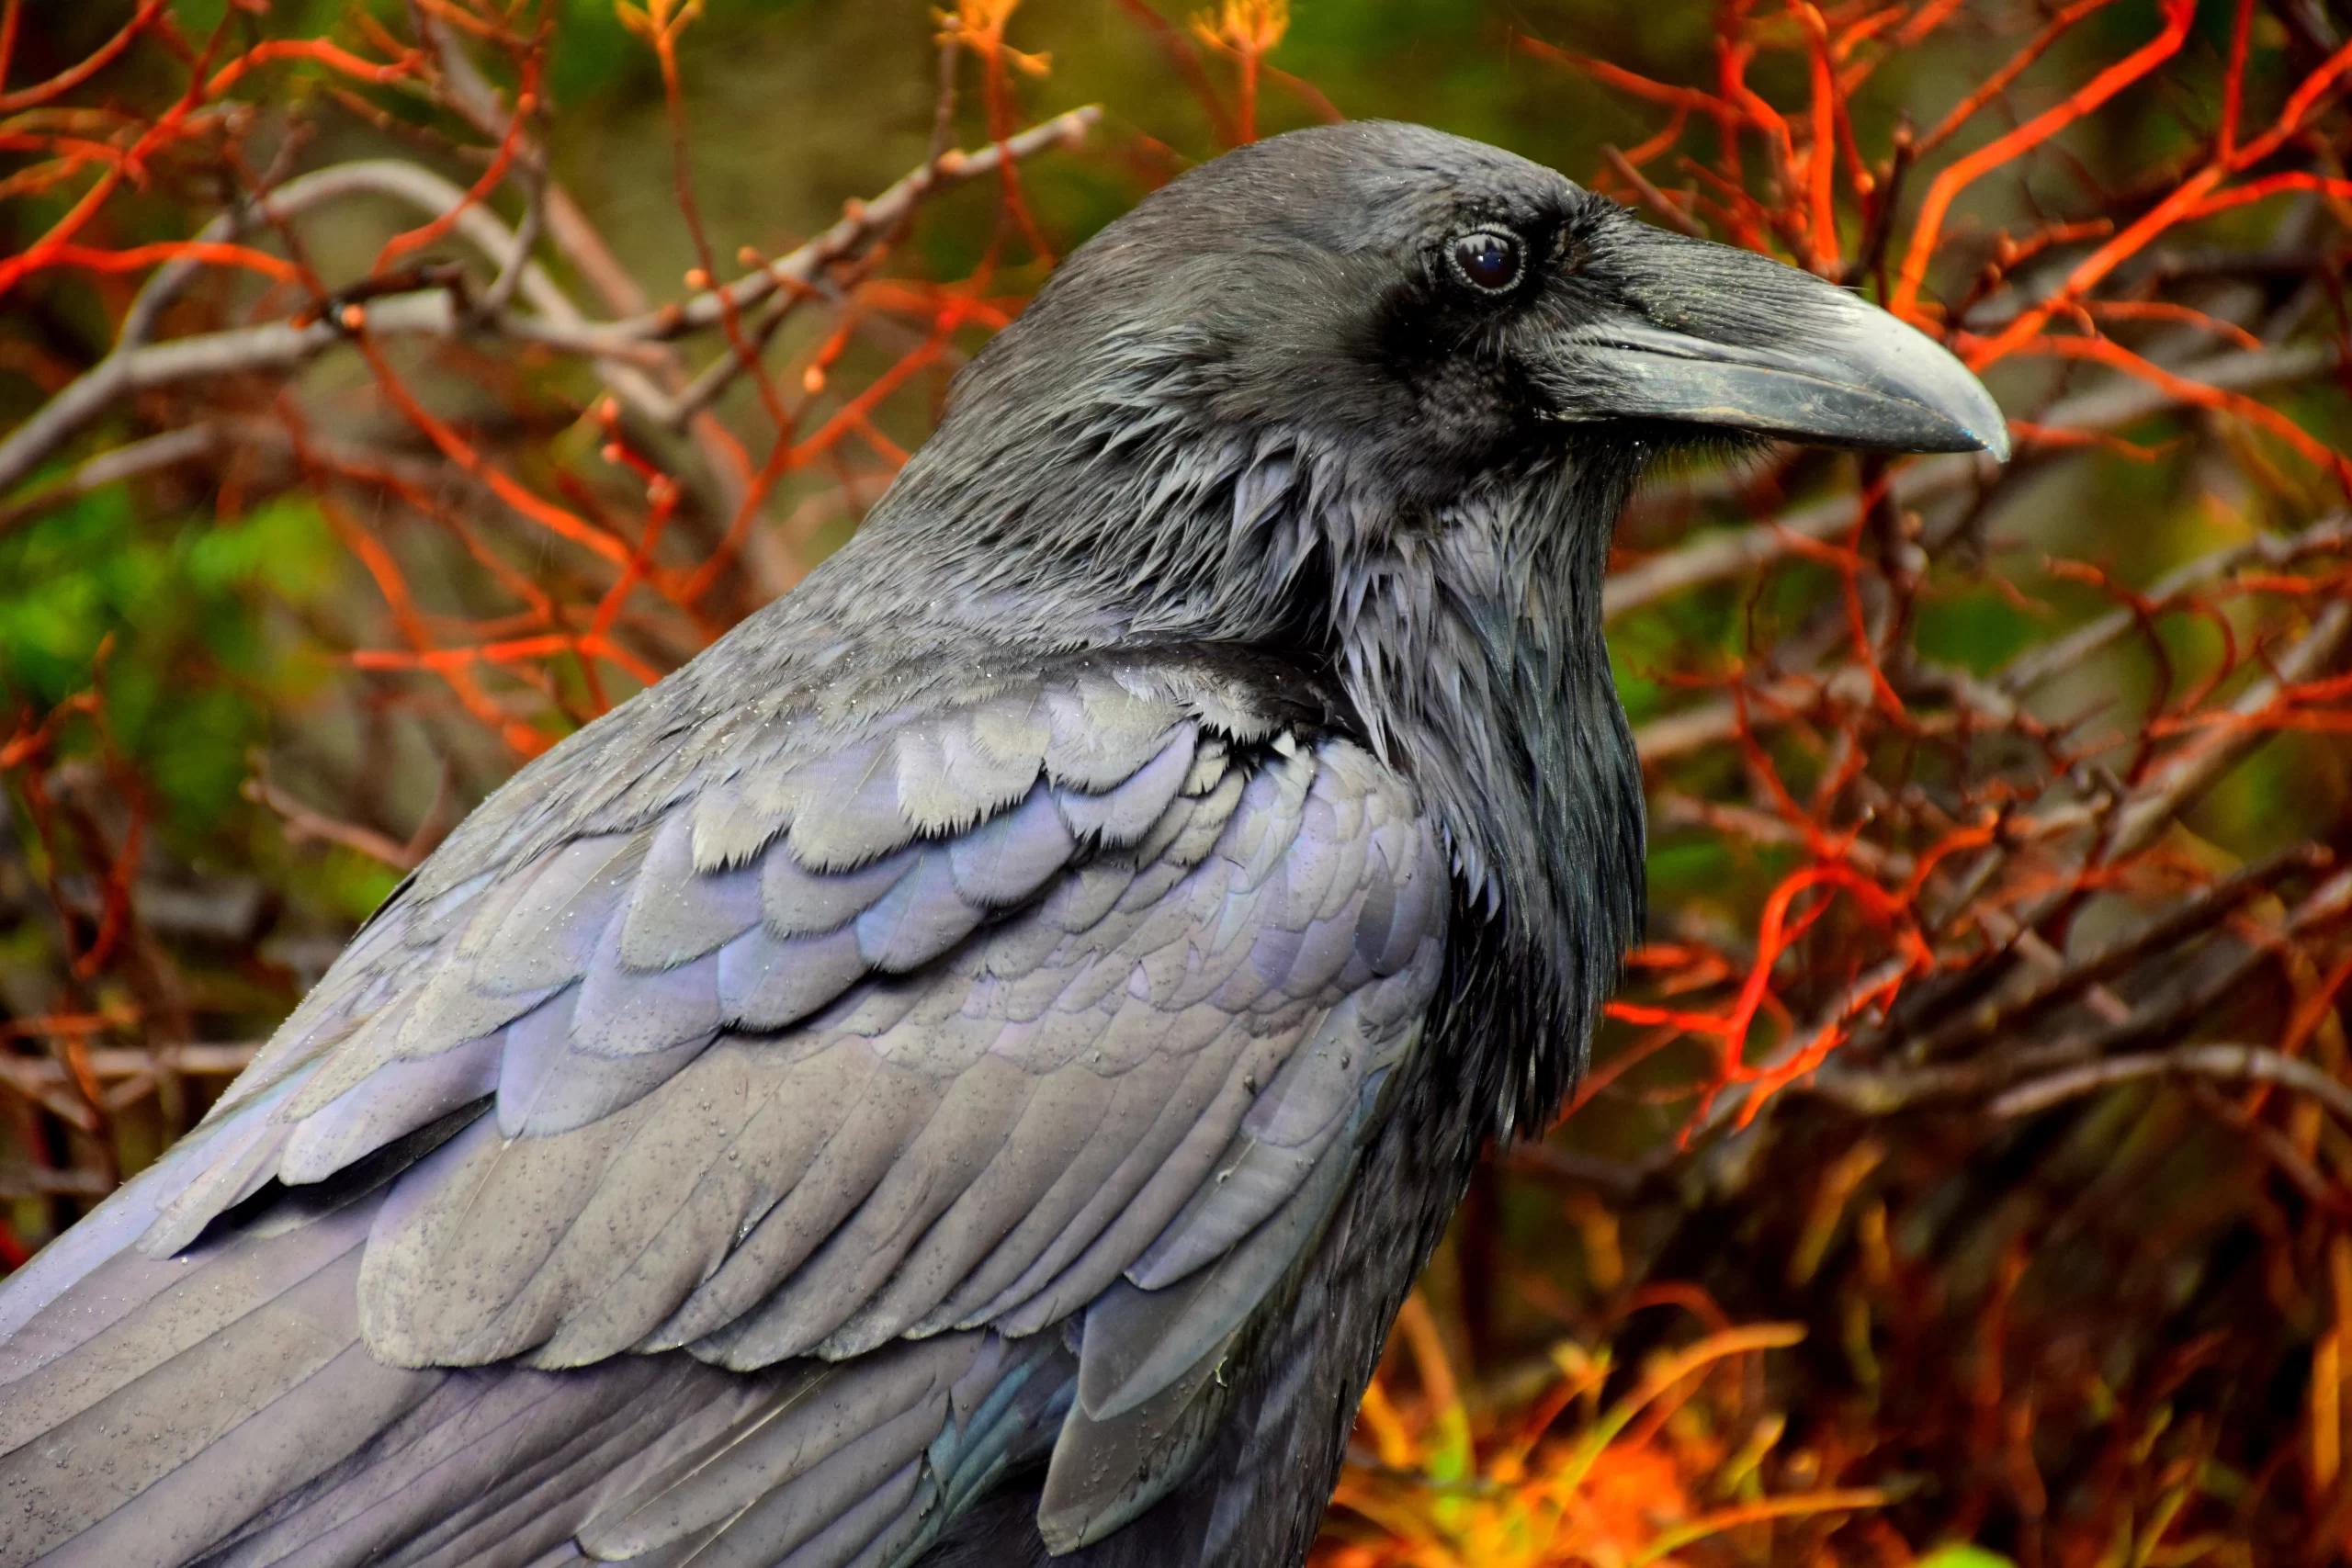 meg-jerrard--Raven with beak facing right up close-unsplash